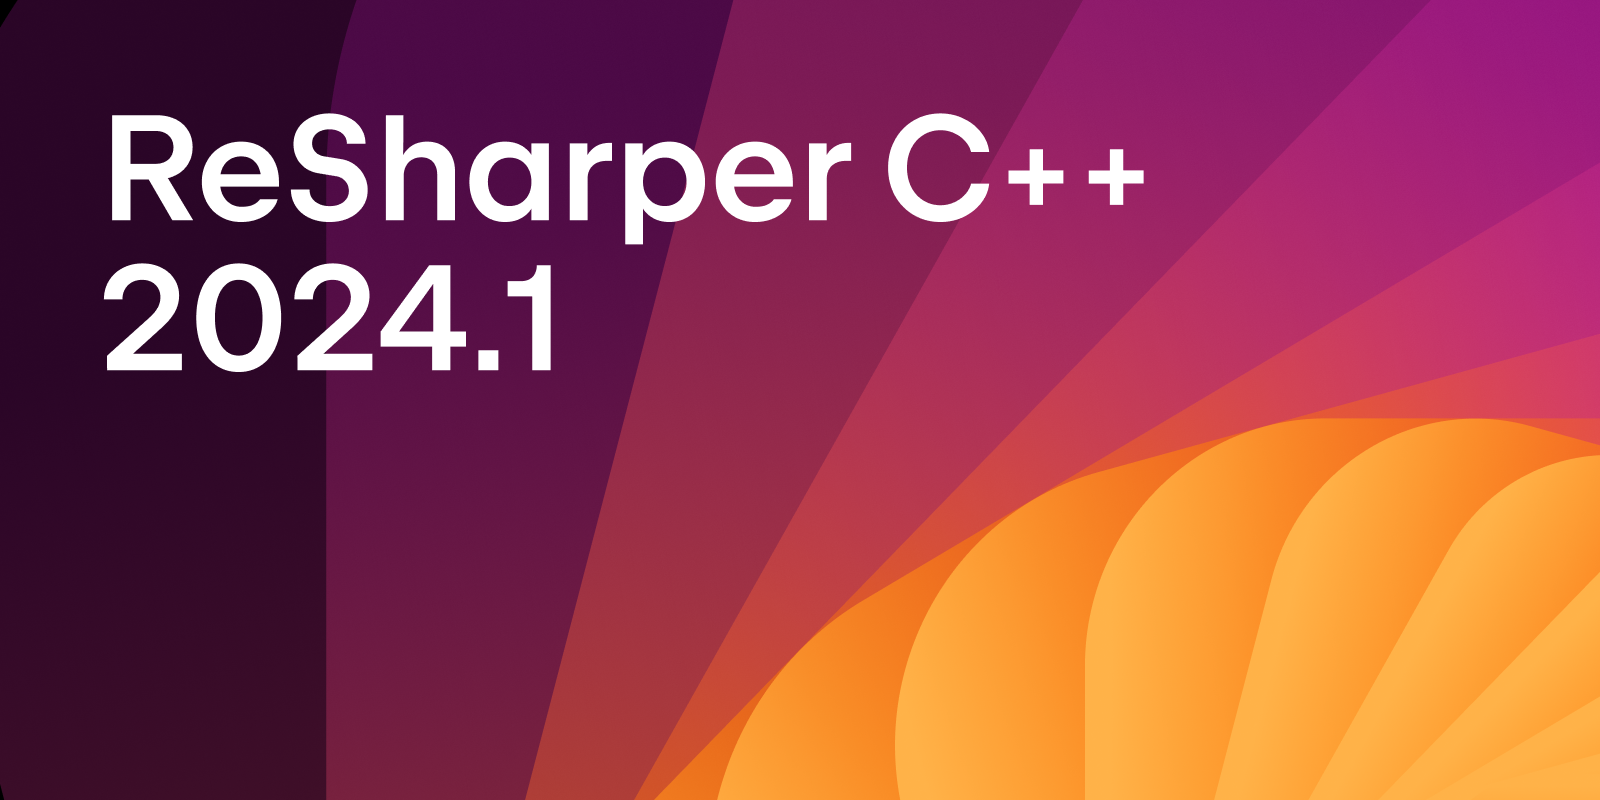 ReSharper C++ 2024.1